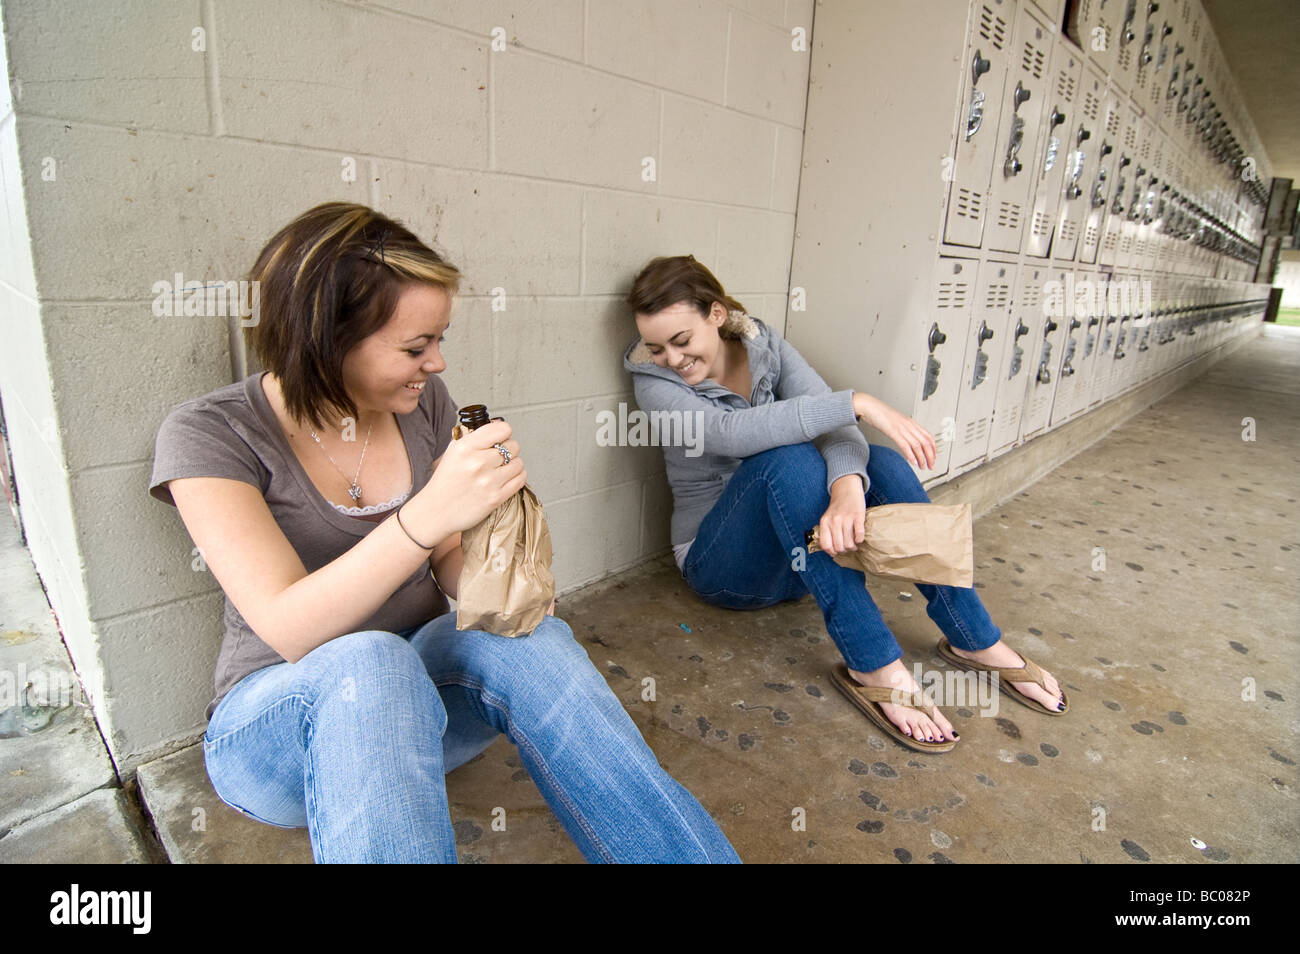 Twin High School Mädchen Betrunken An Ihrer High School Stockfotografie Alamy 